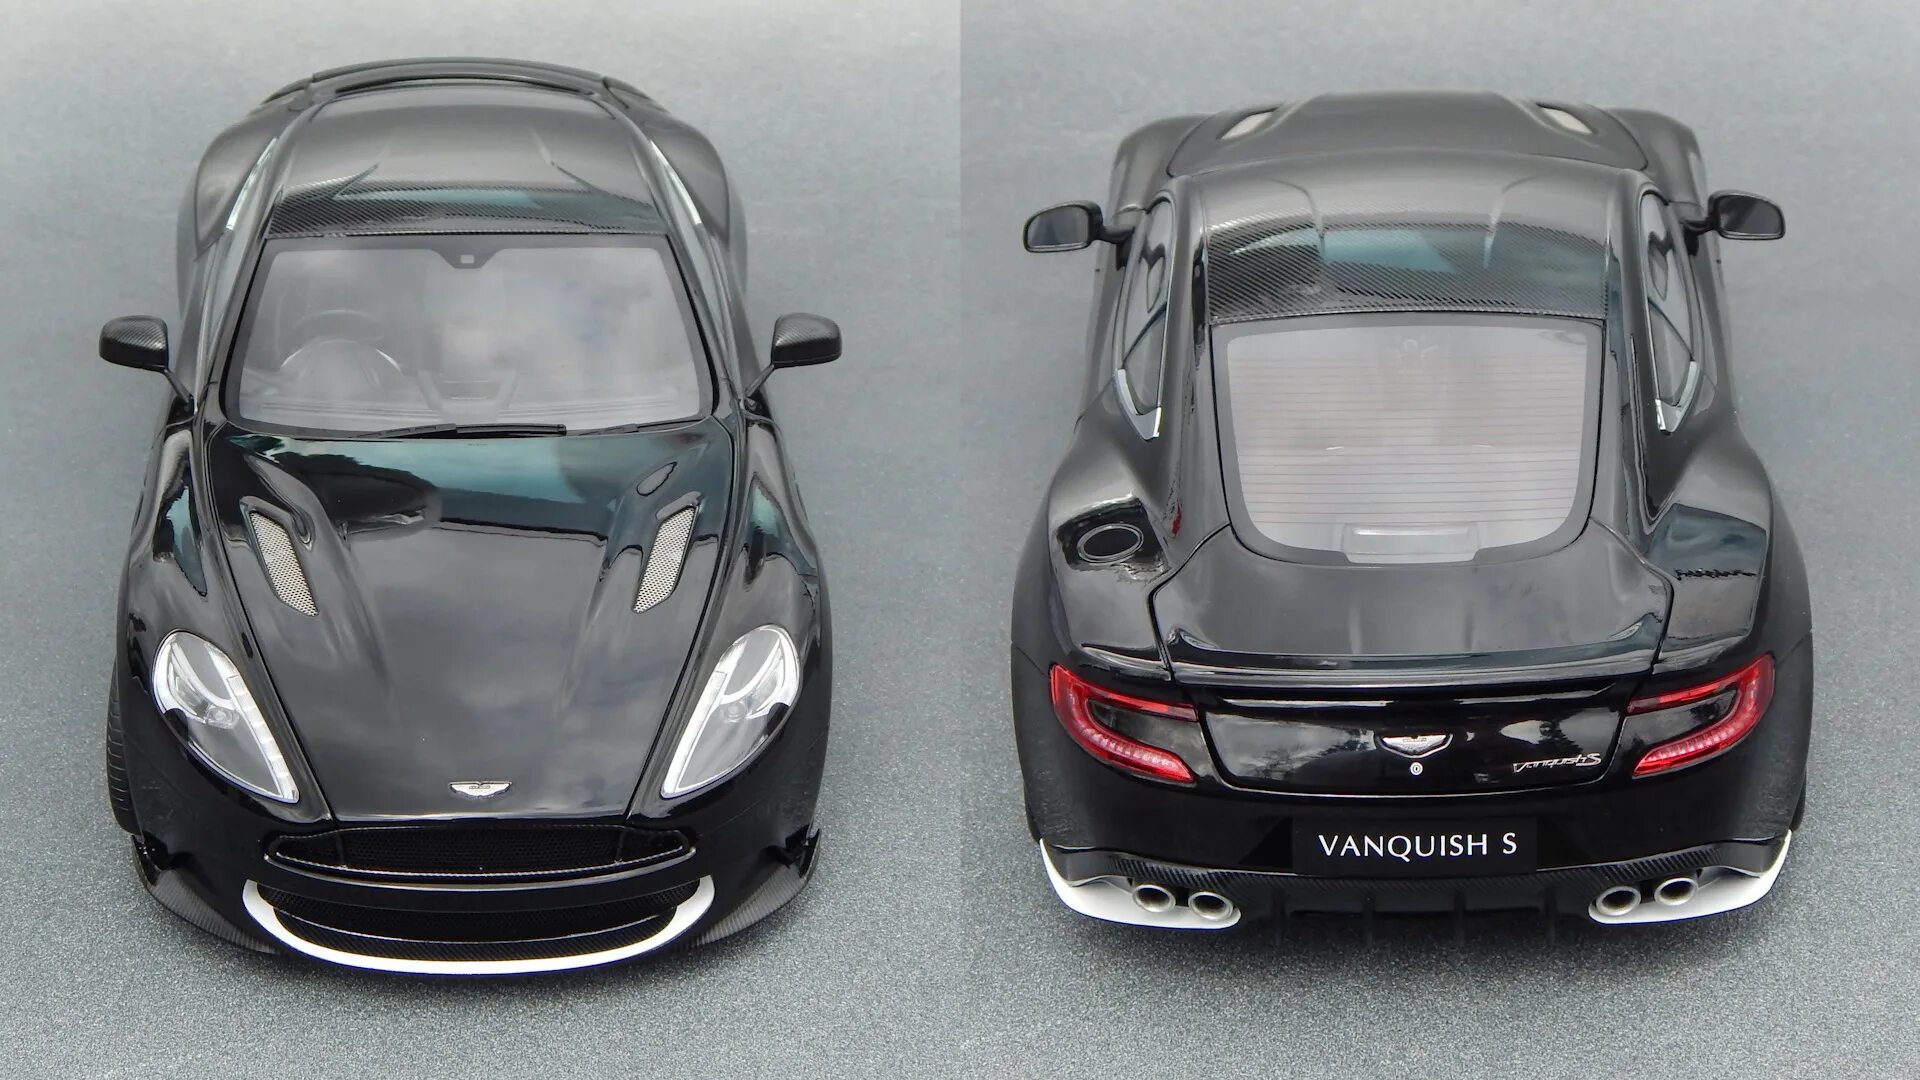 AUTOART 1 18. Aston Martin Vantage v12 gt3 1/18 AUTOART. Aston Martin DBS Superleggera AUTOART 1 18. Mercedes-AMG gt s AUTOART 1:18.